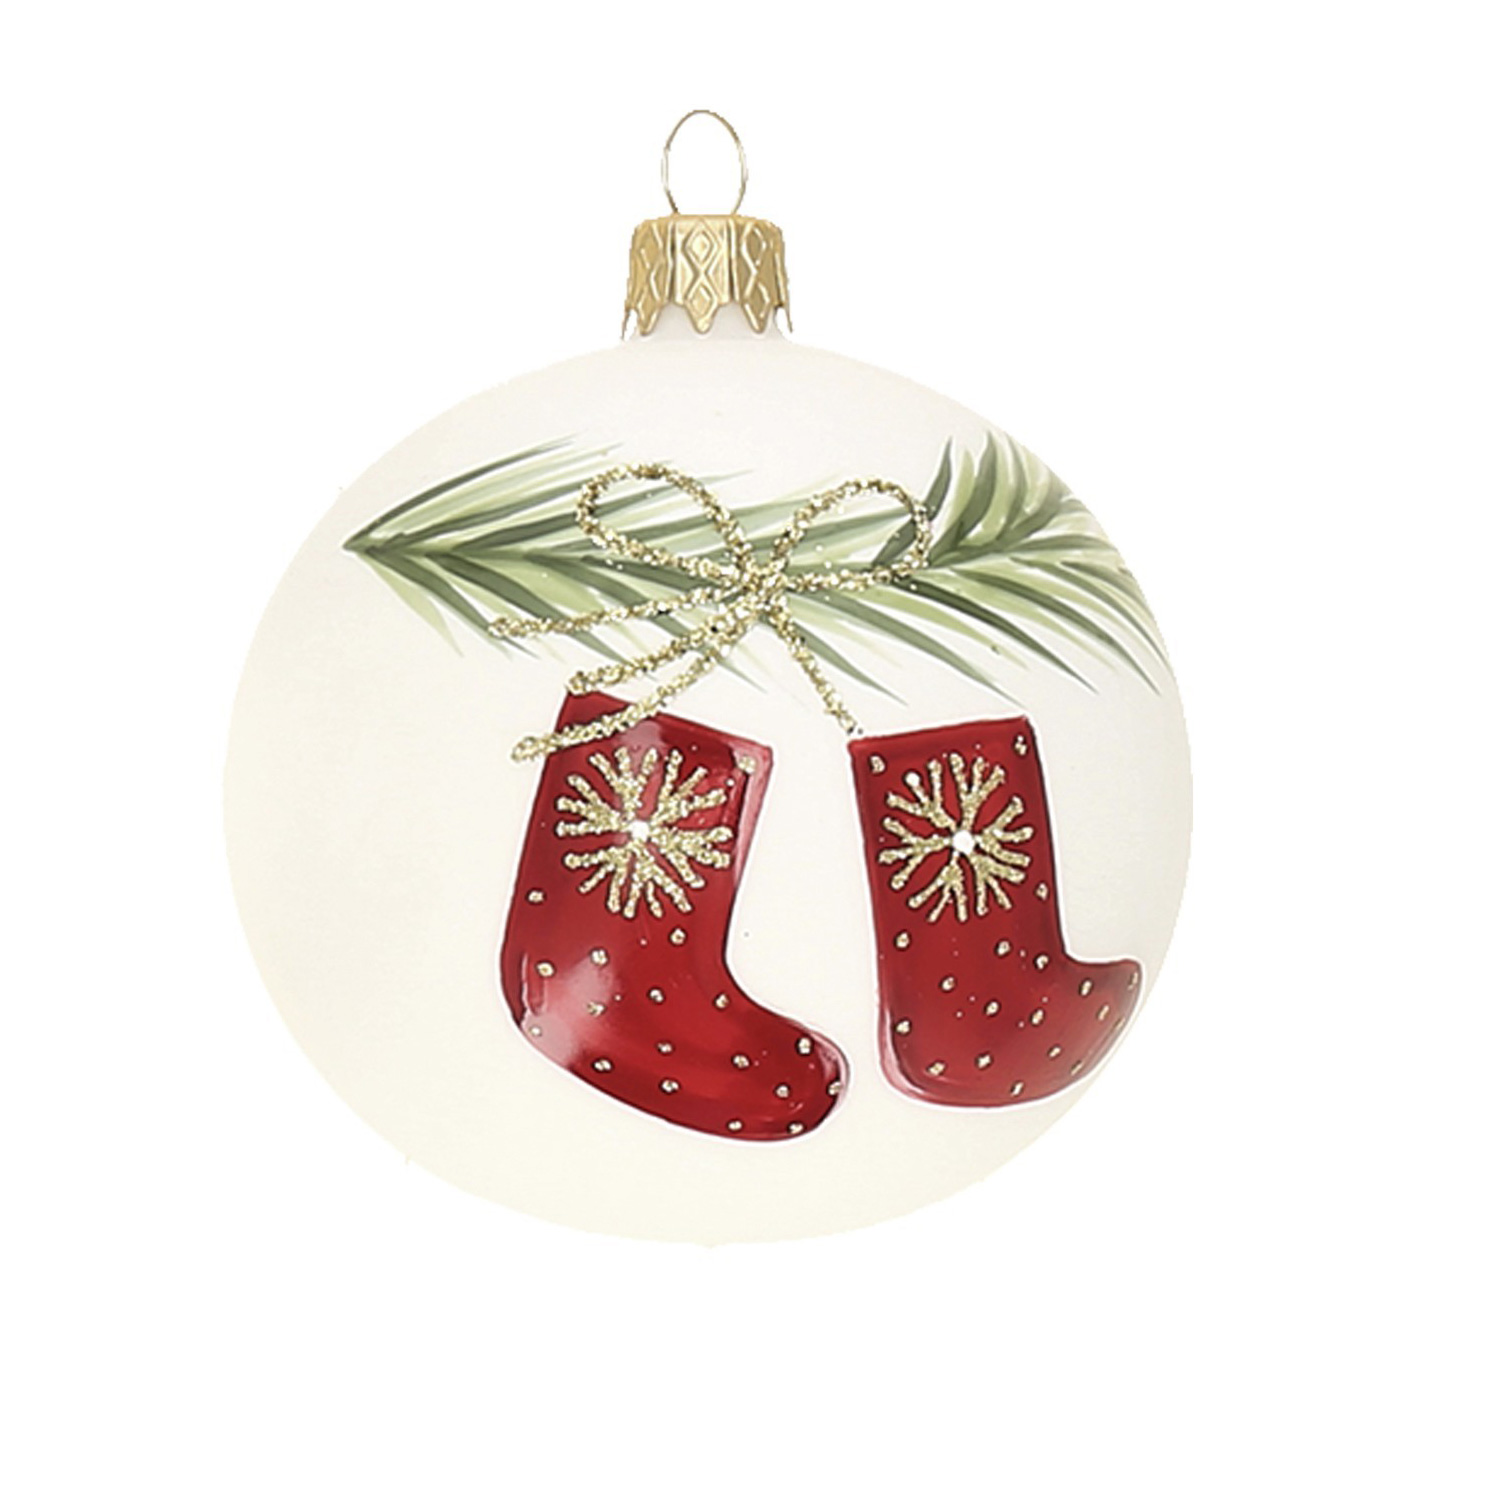 Weihnachtskugel "Stiefel" rot-grün-weiß, D. ca. 8 cm, handbemalt, weiß matt 